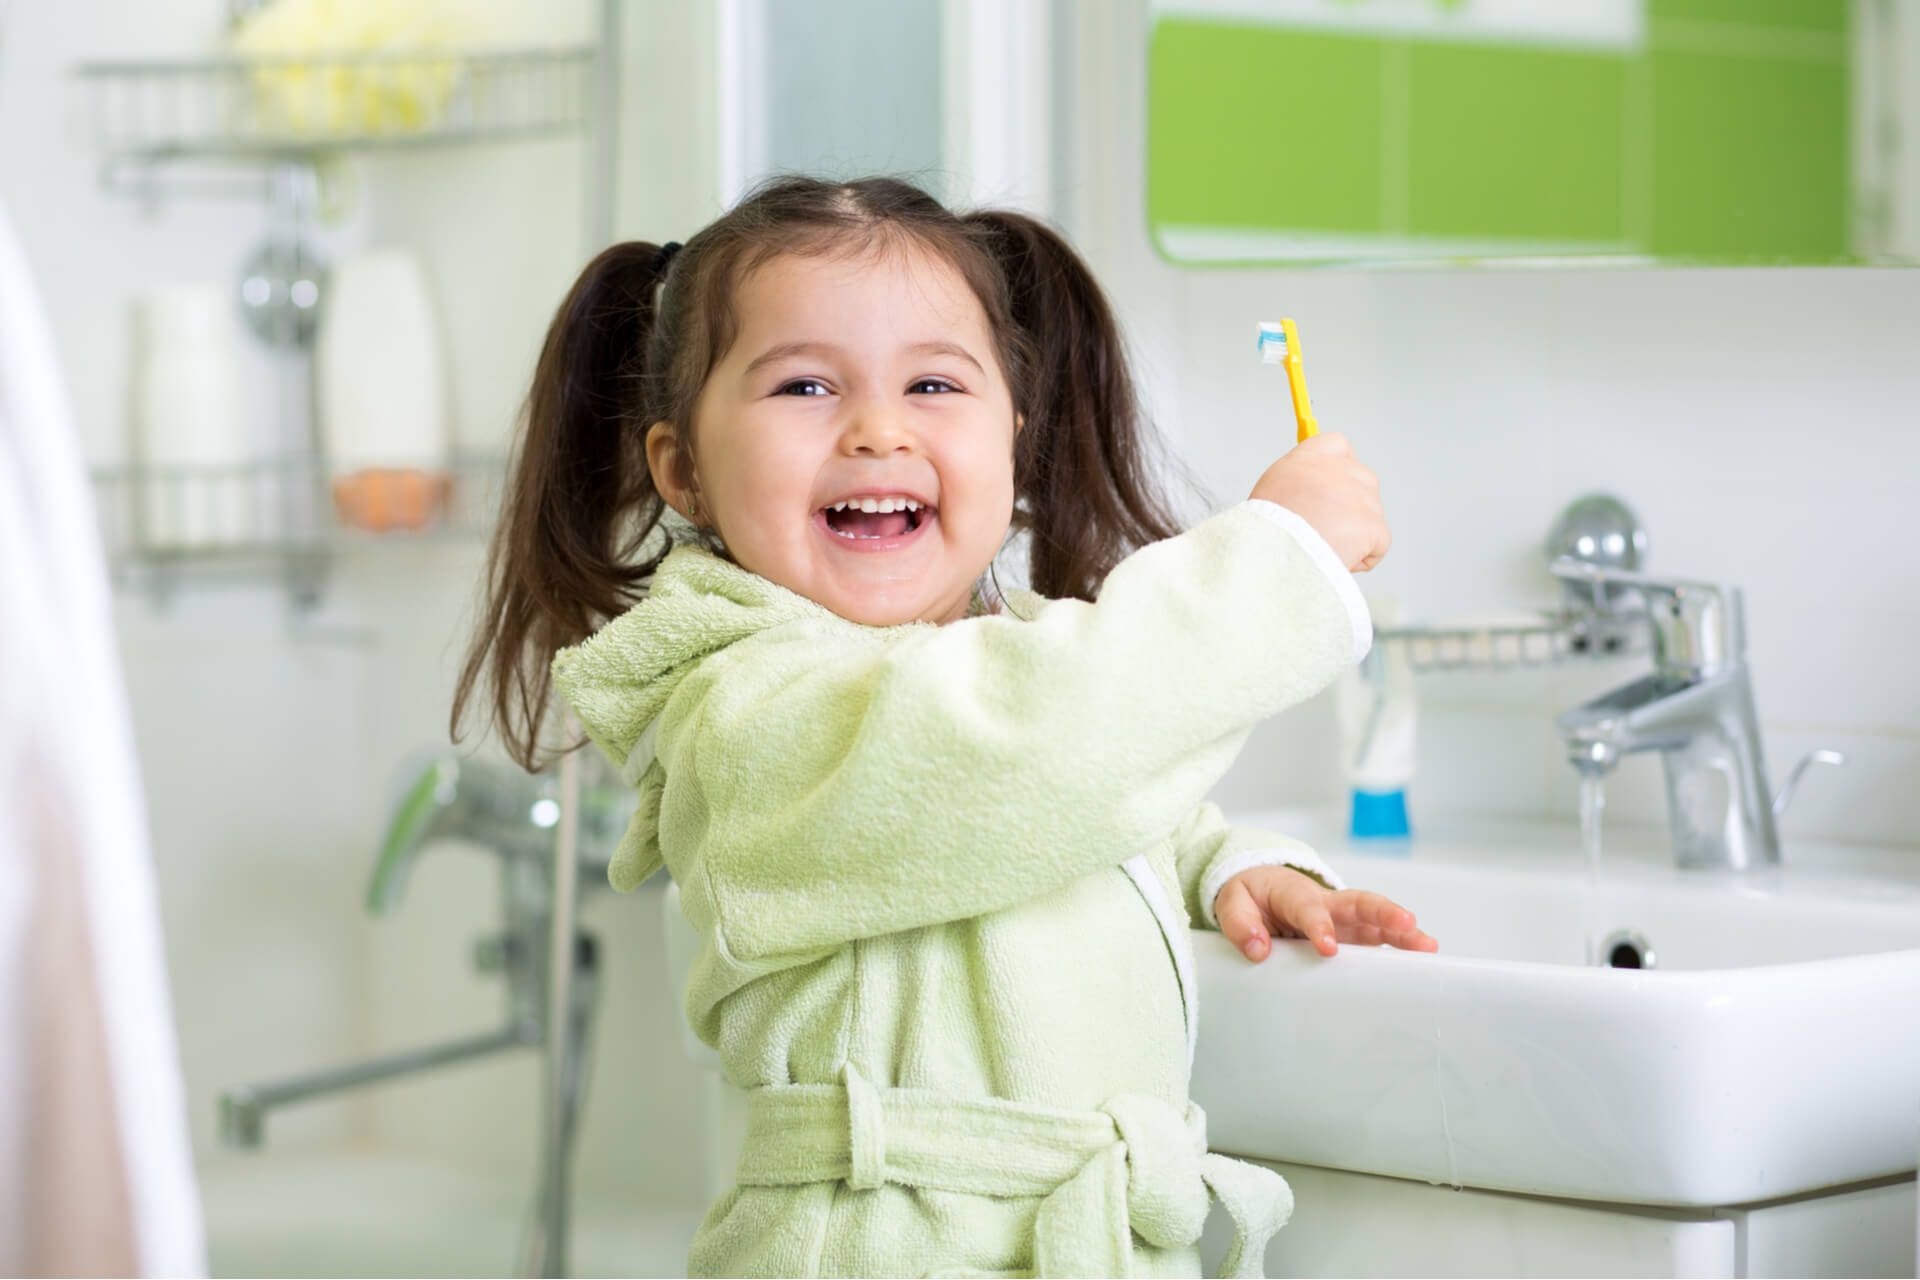 Cute child girl brushing teeth in bathroom